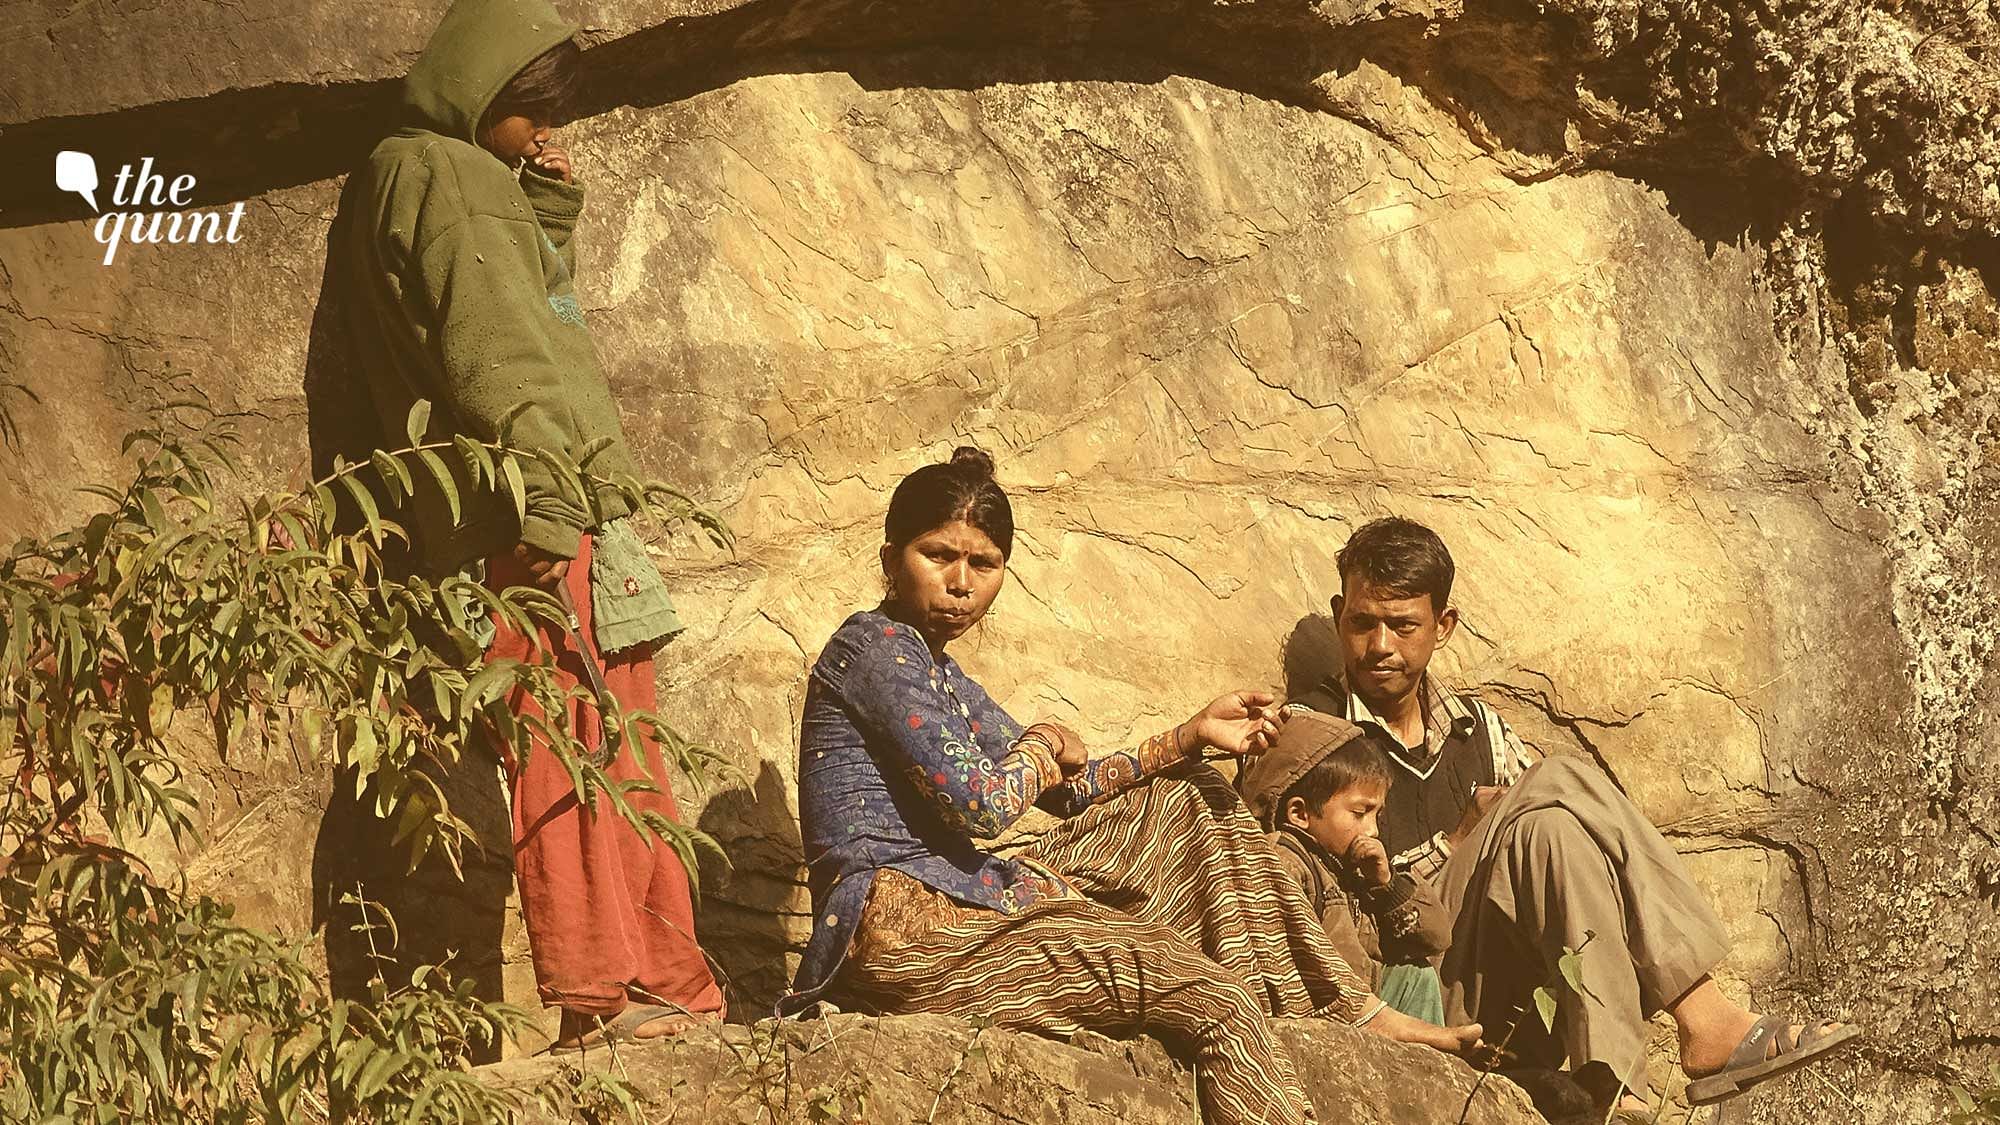 A Van-Raji family in rocky habitats. Image used for representational purposes.